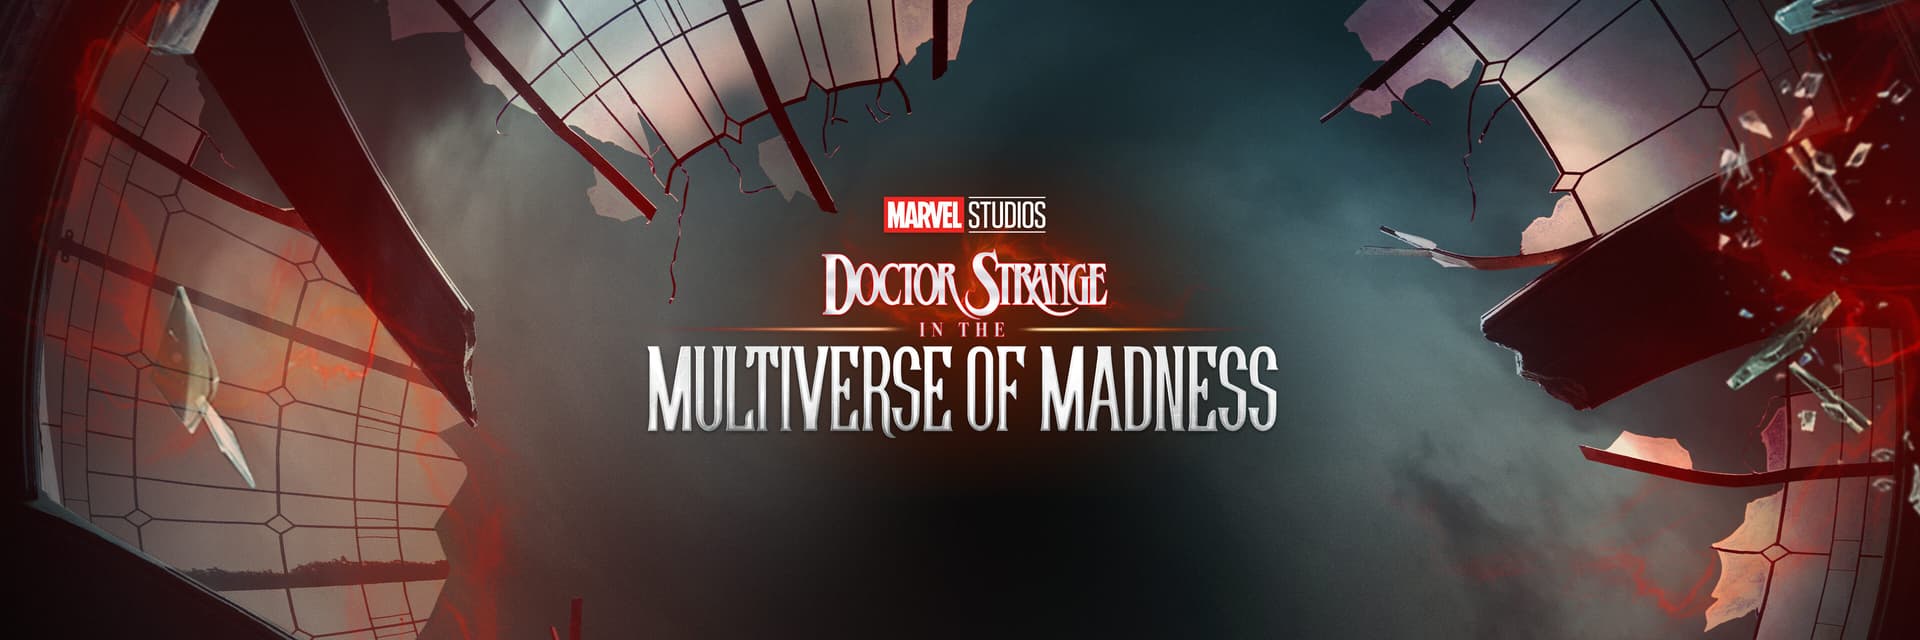 Marvel Studios' Doctor Strange in the Multiverse of Madness Live Red Carpet Premiere